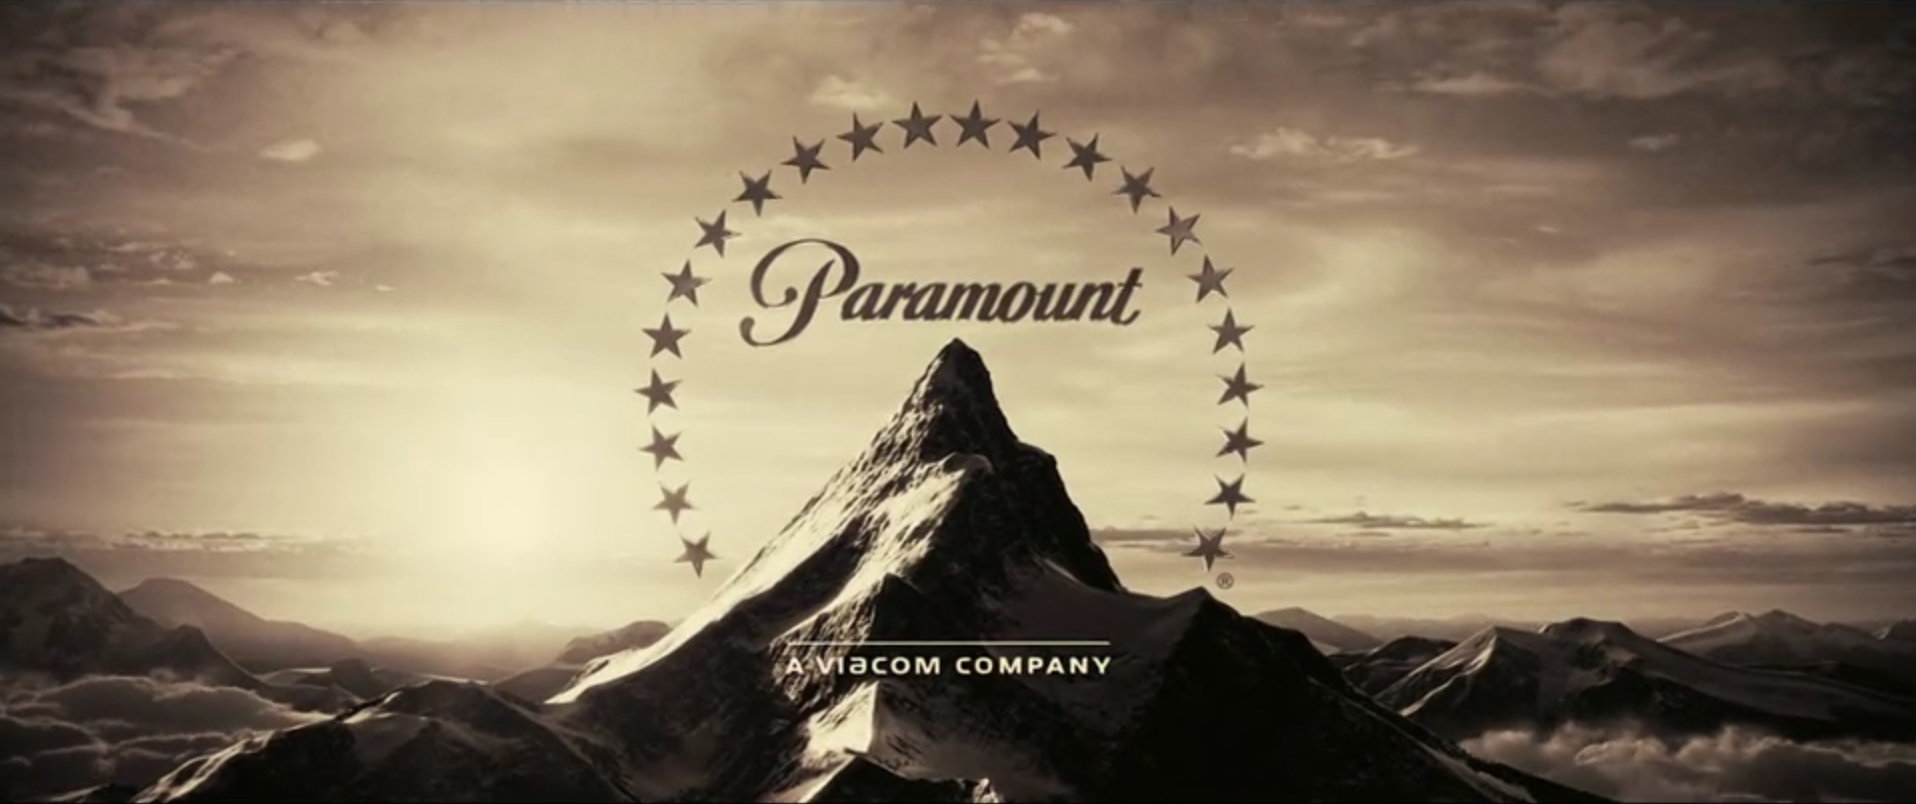 Paramount Pictures "Interstellar" (2014)